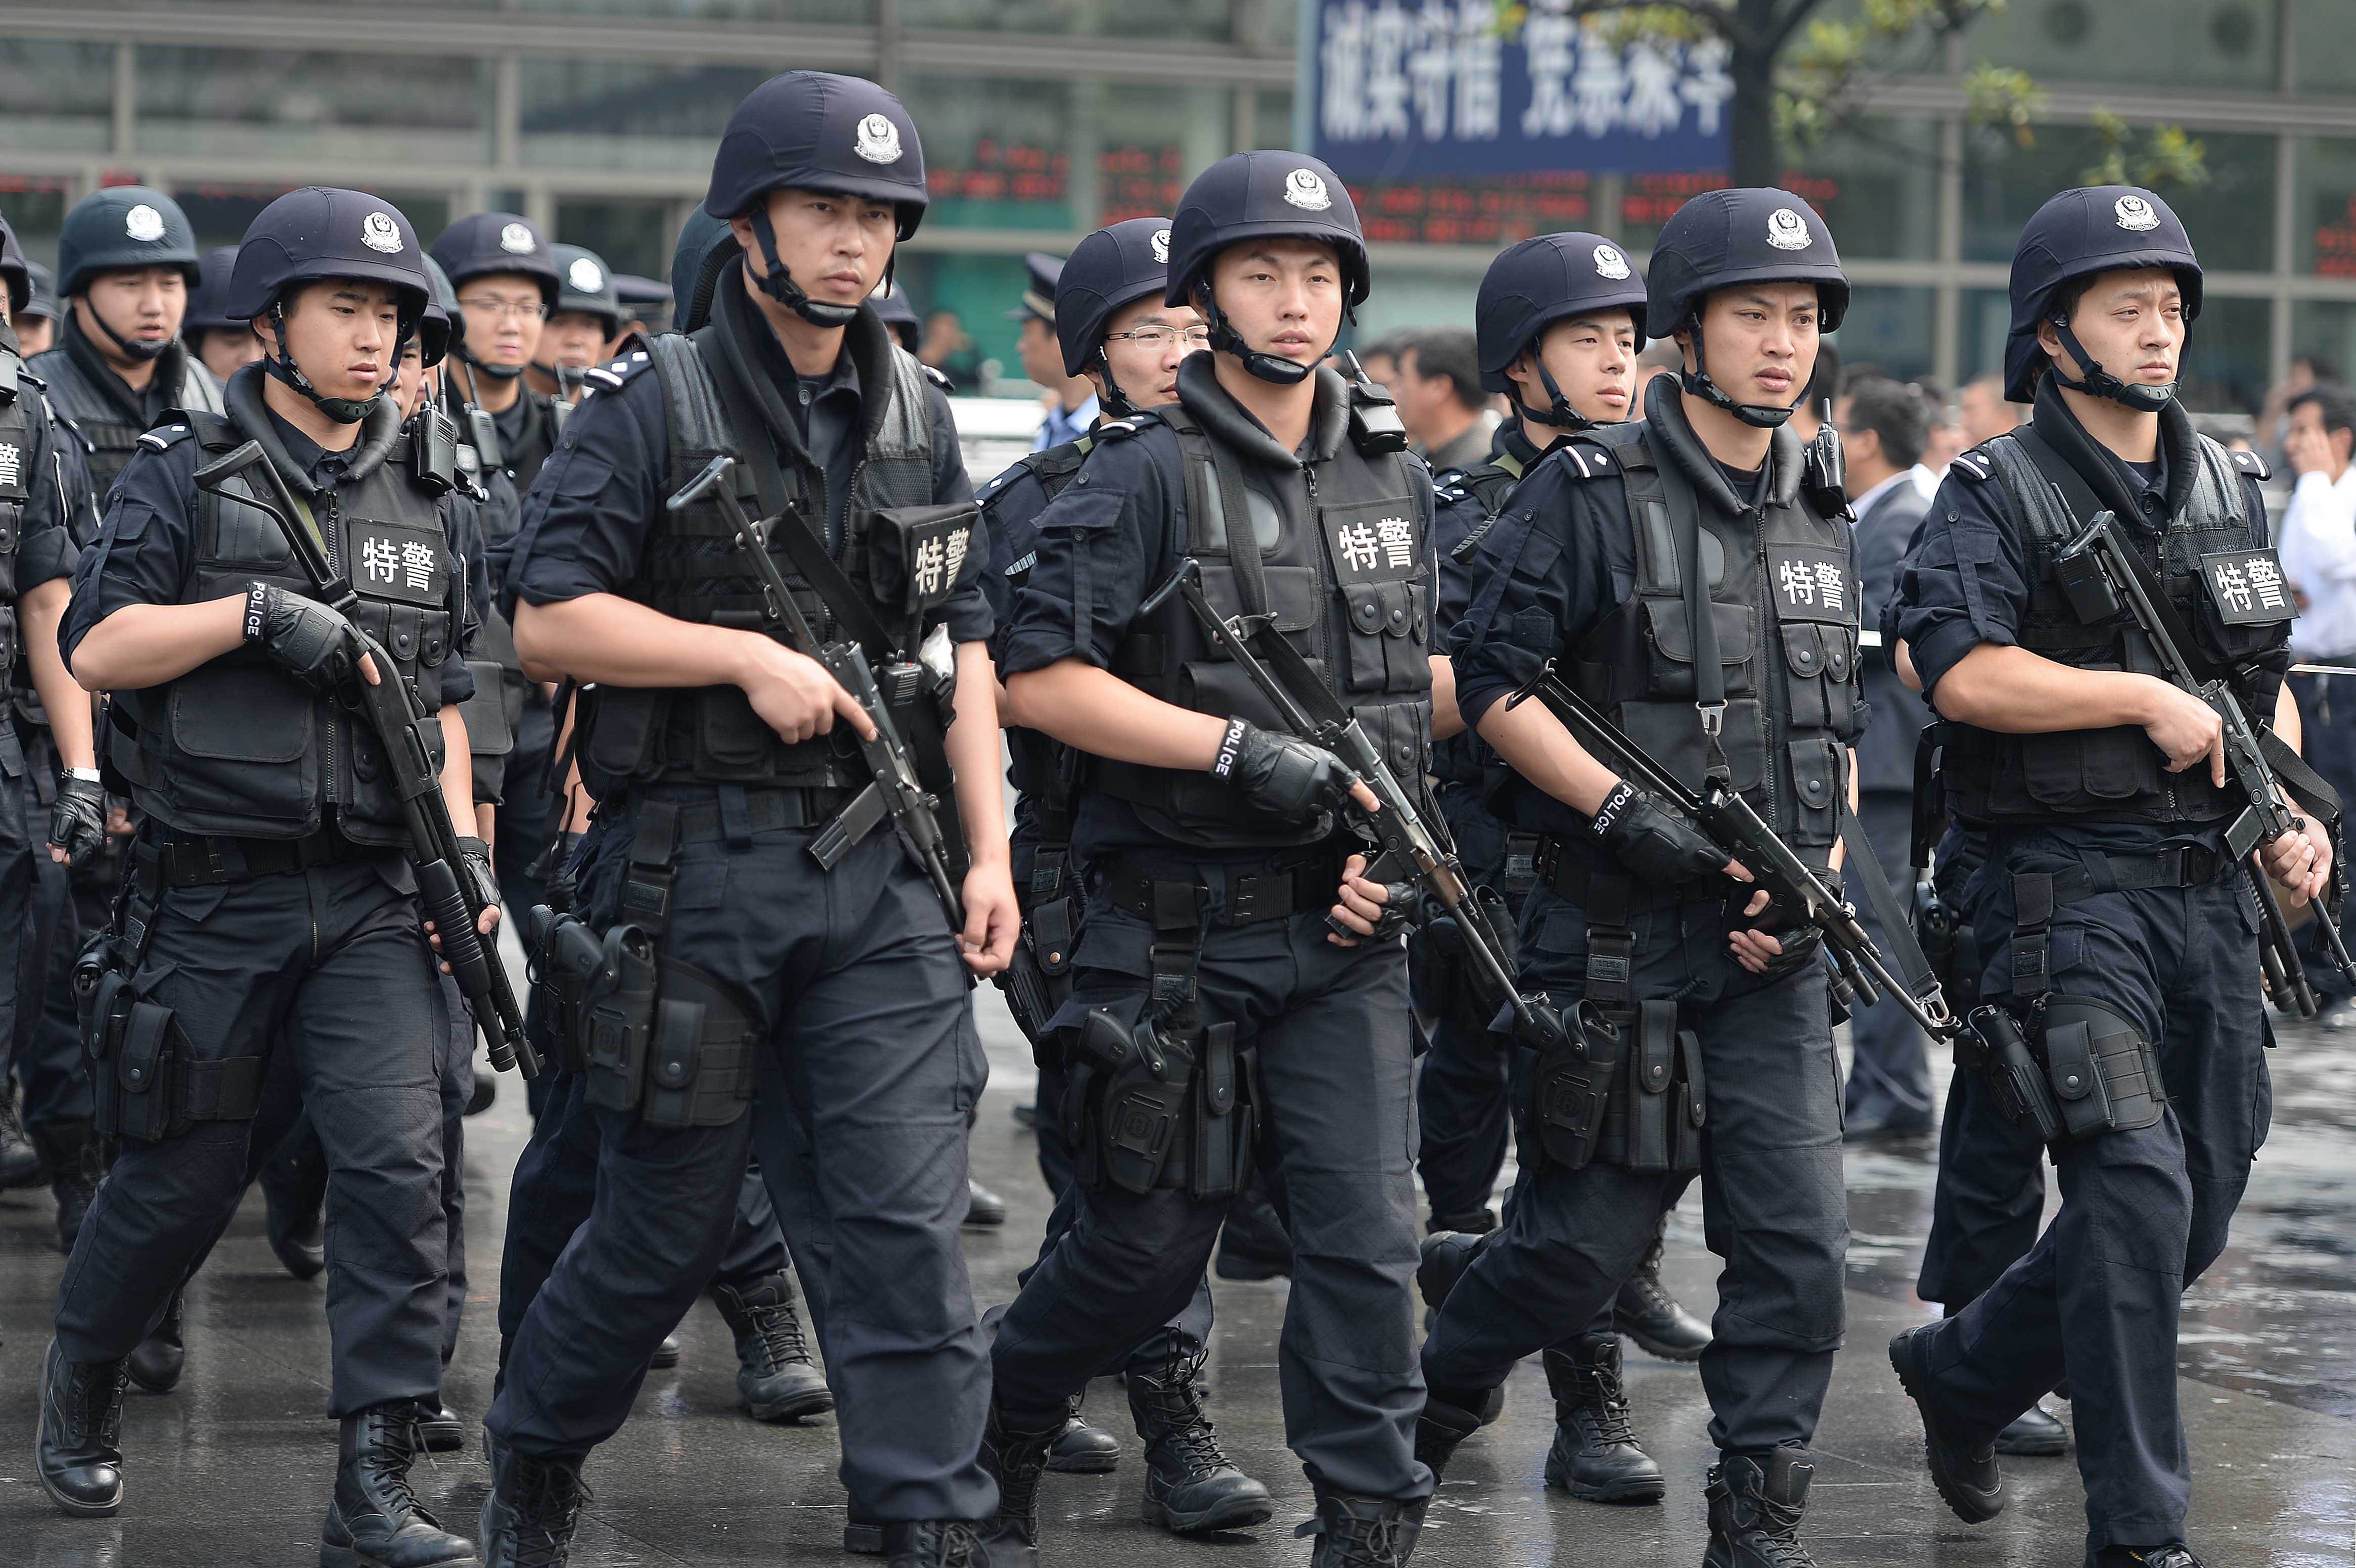 Swat kuwait. Китайский спецназ SWAT. Special Assault Team Япония. Полицейский спецназ Японии. Китайская полиция SWAT.